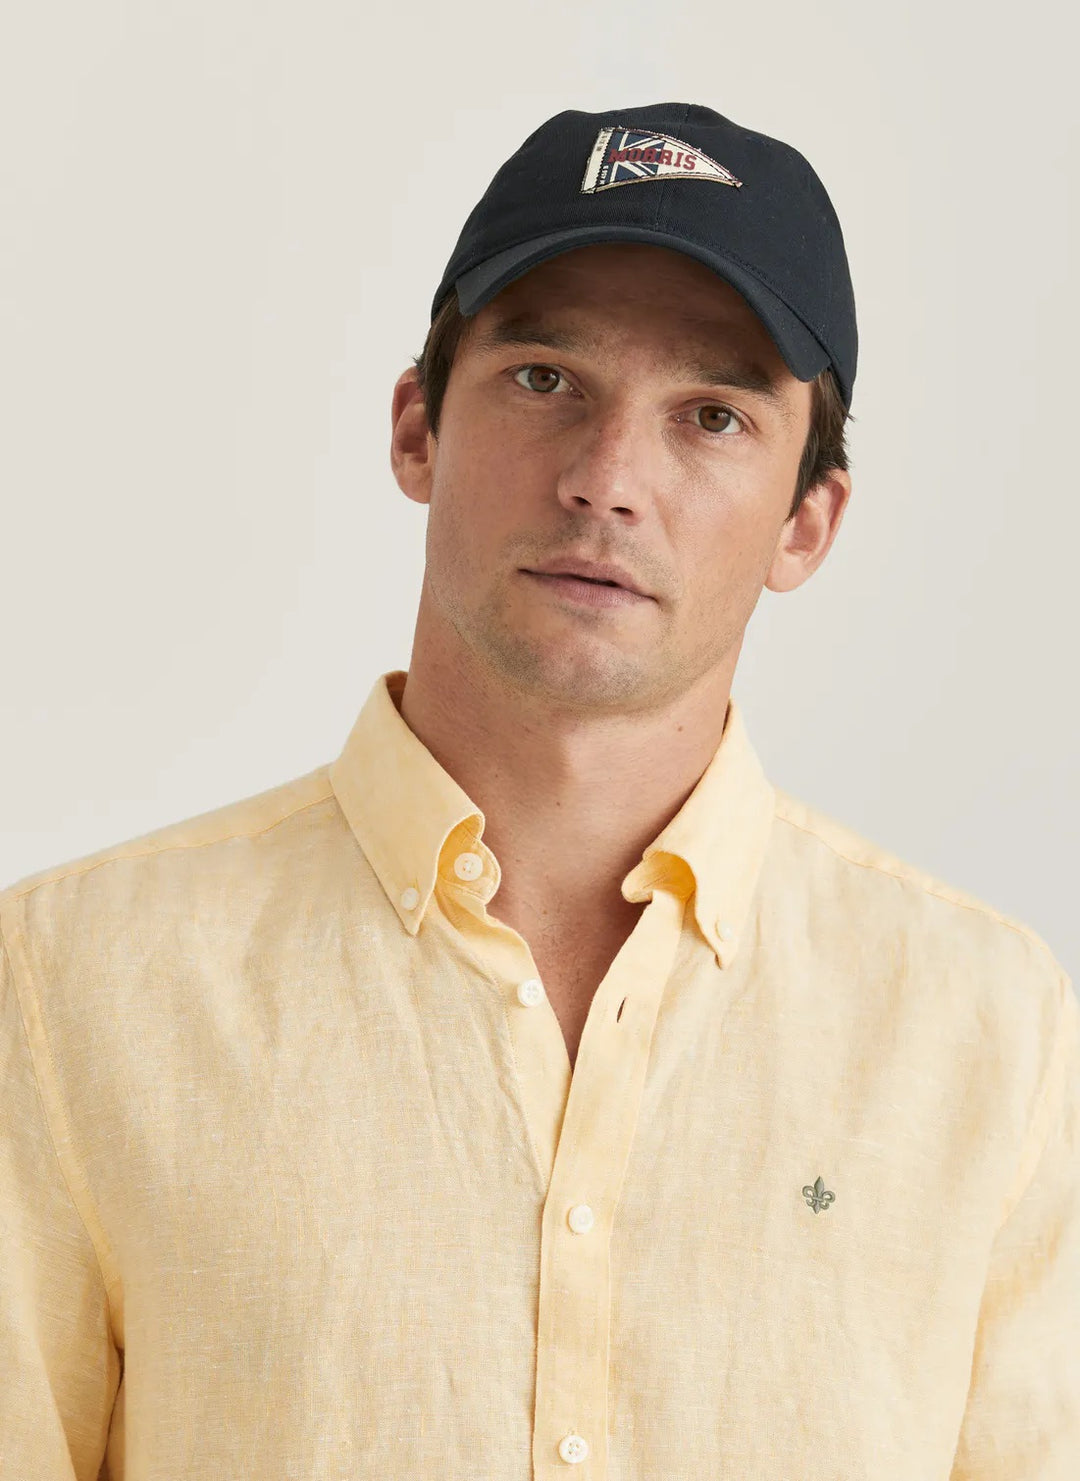 Douglas Linen Shirt-Classic Fit  Yellow